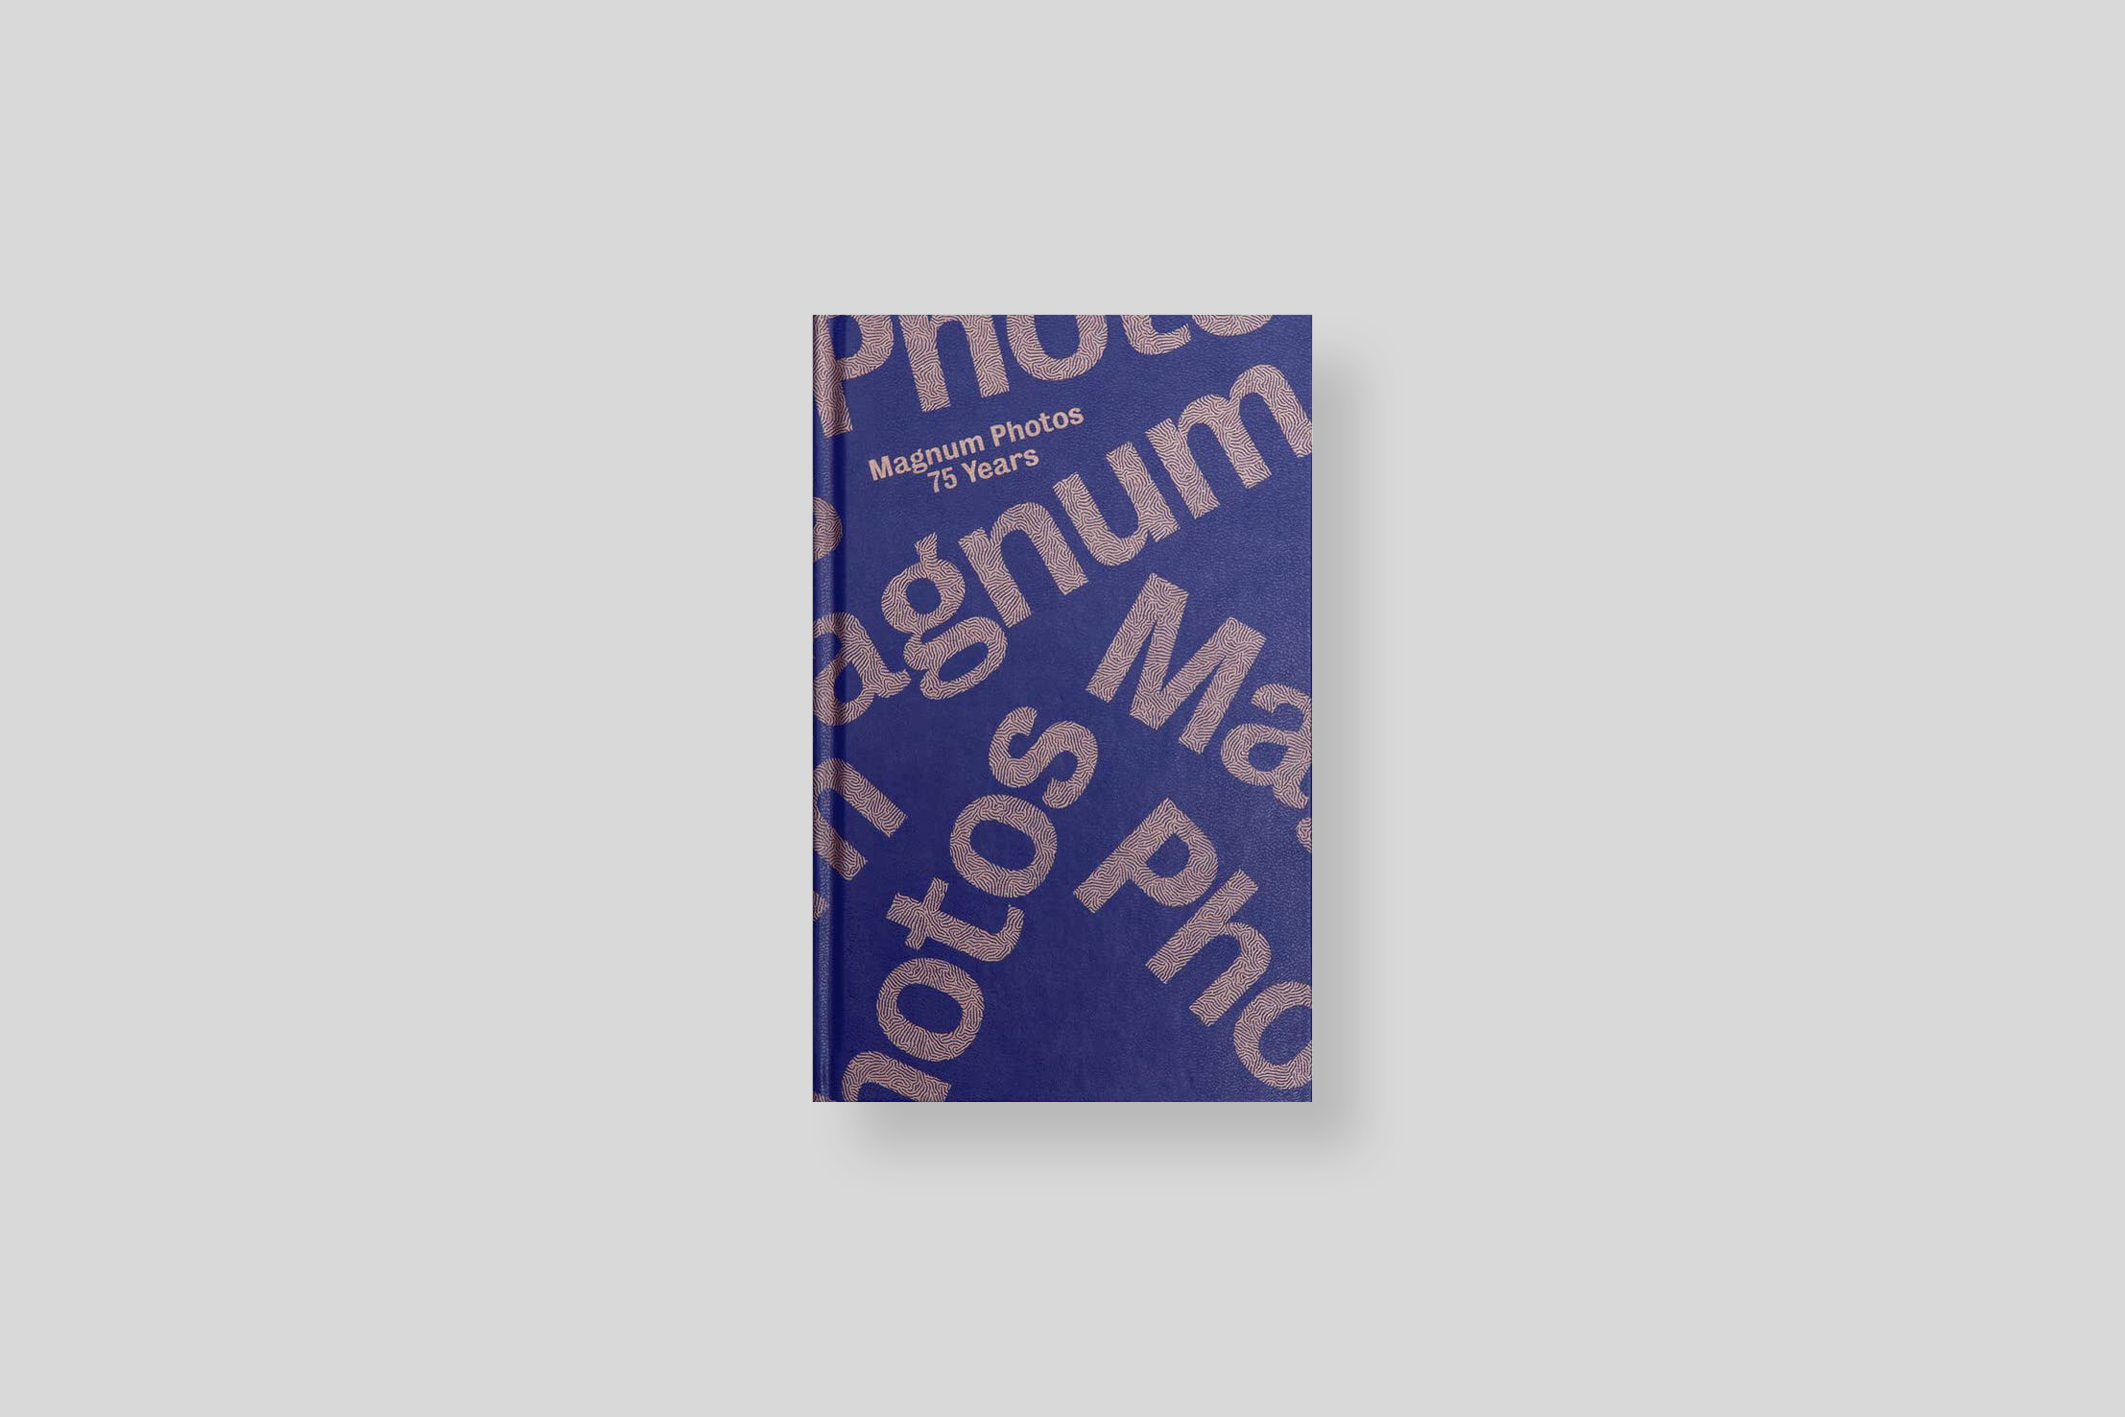 magnum-photos-75-ans-seclier-atelier-exb-cover